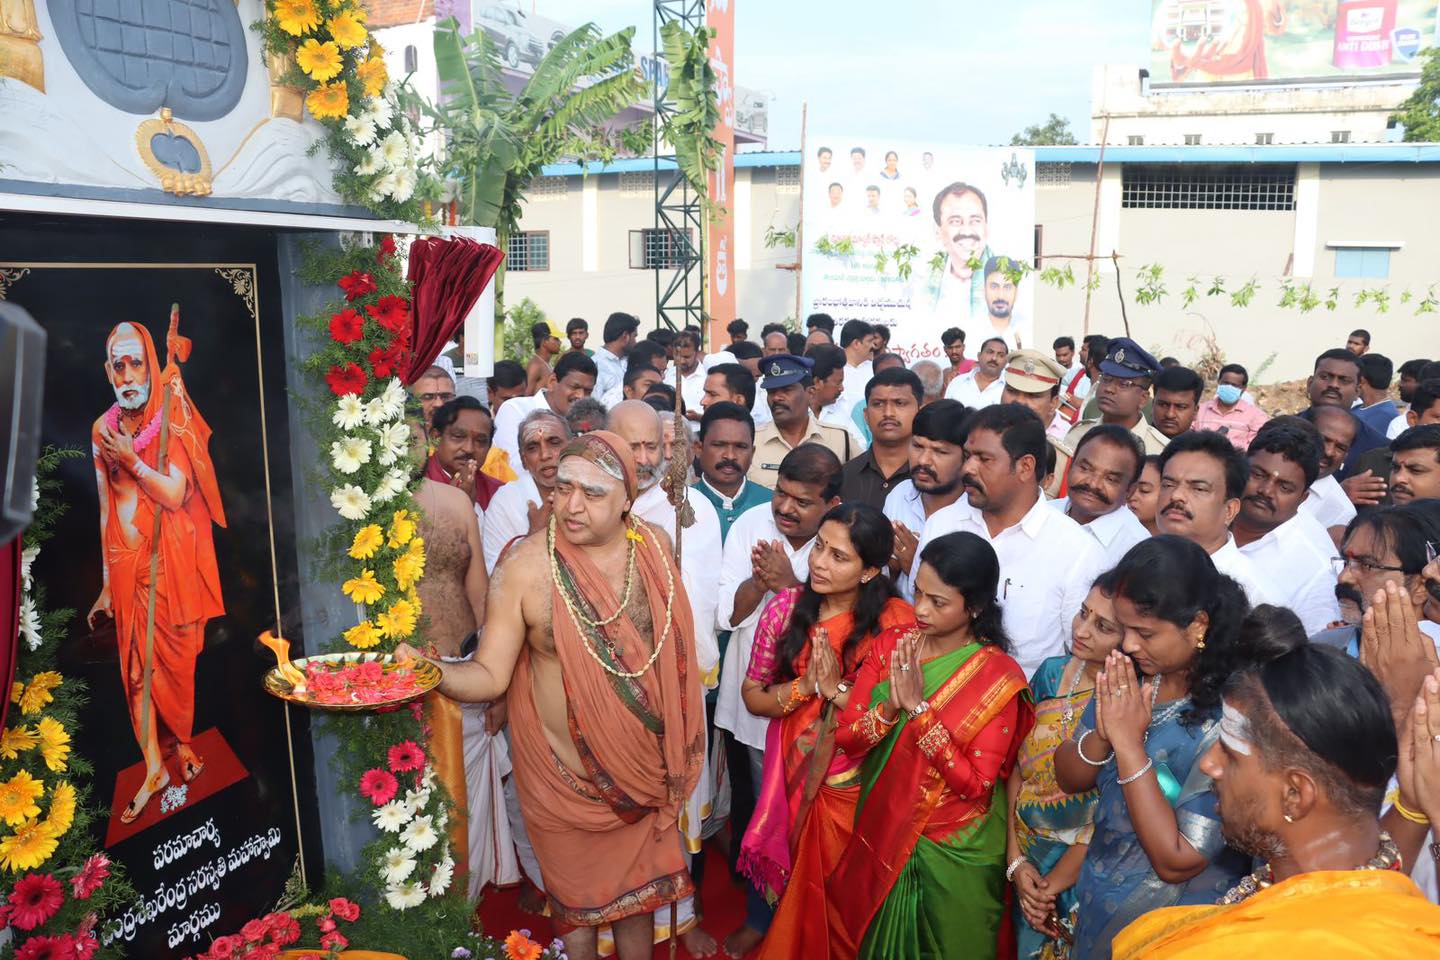 Paramacharya Sri Chandrasekharendra Saraswathi Marg - New road at Tirupati inaugurated